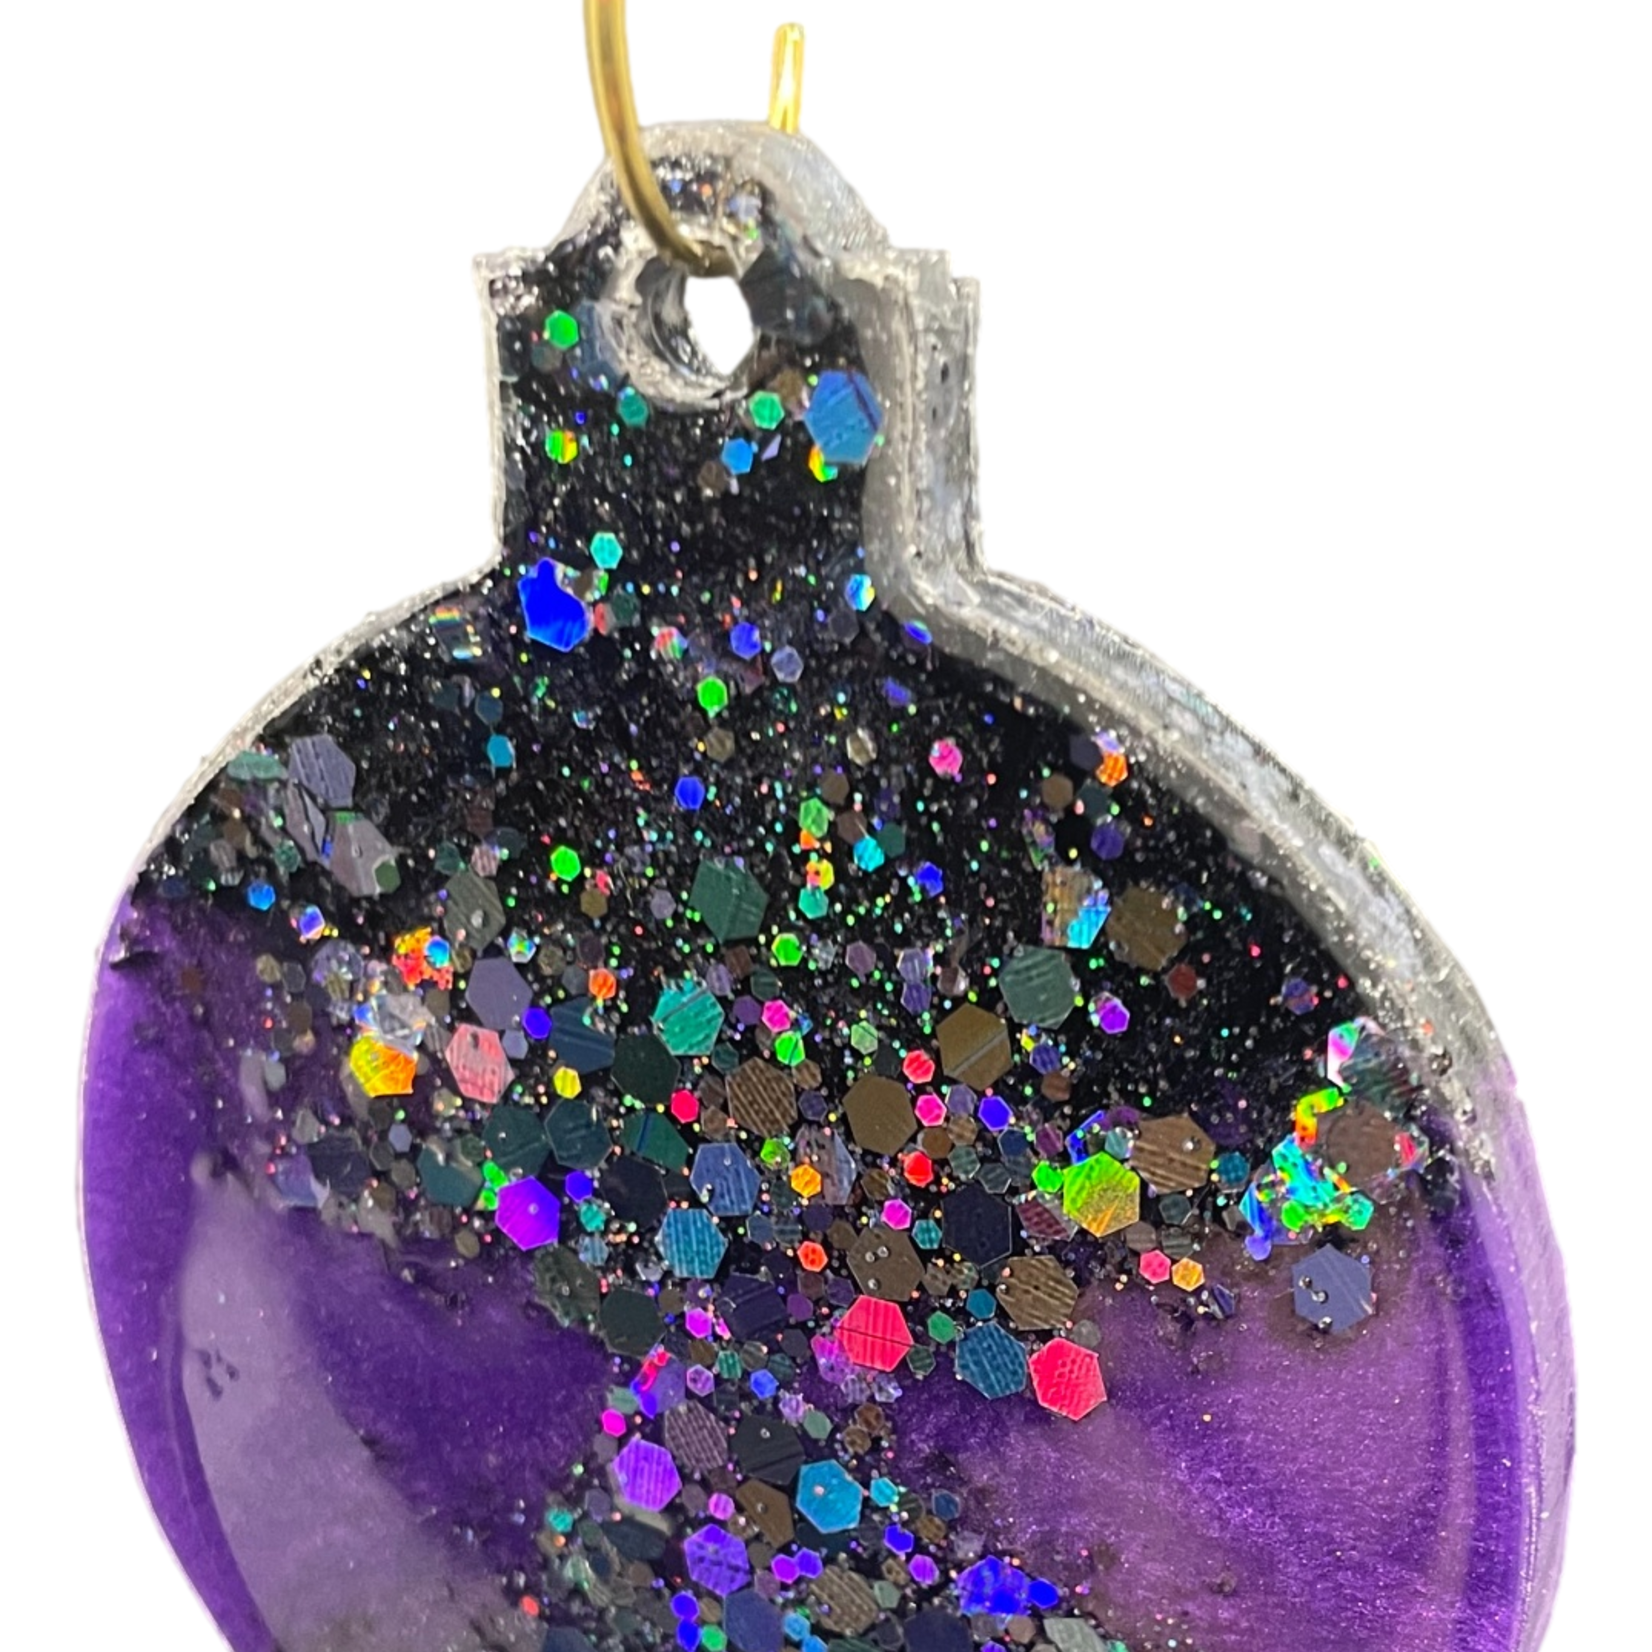 East Coast Sirens Purple with Purple Glitter Ball Ornament